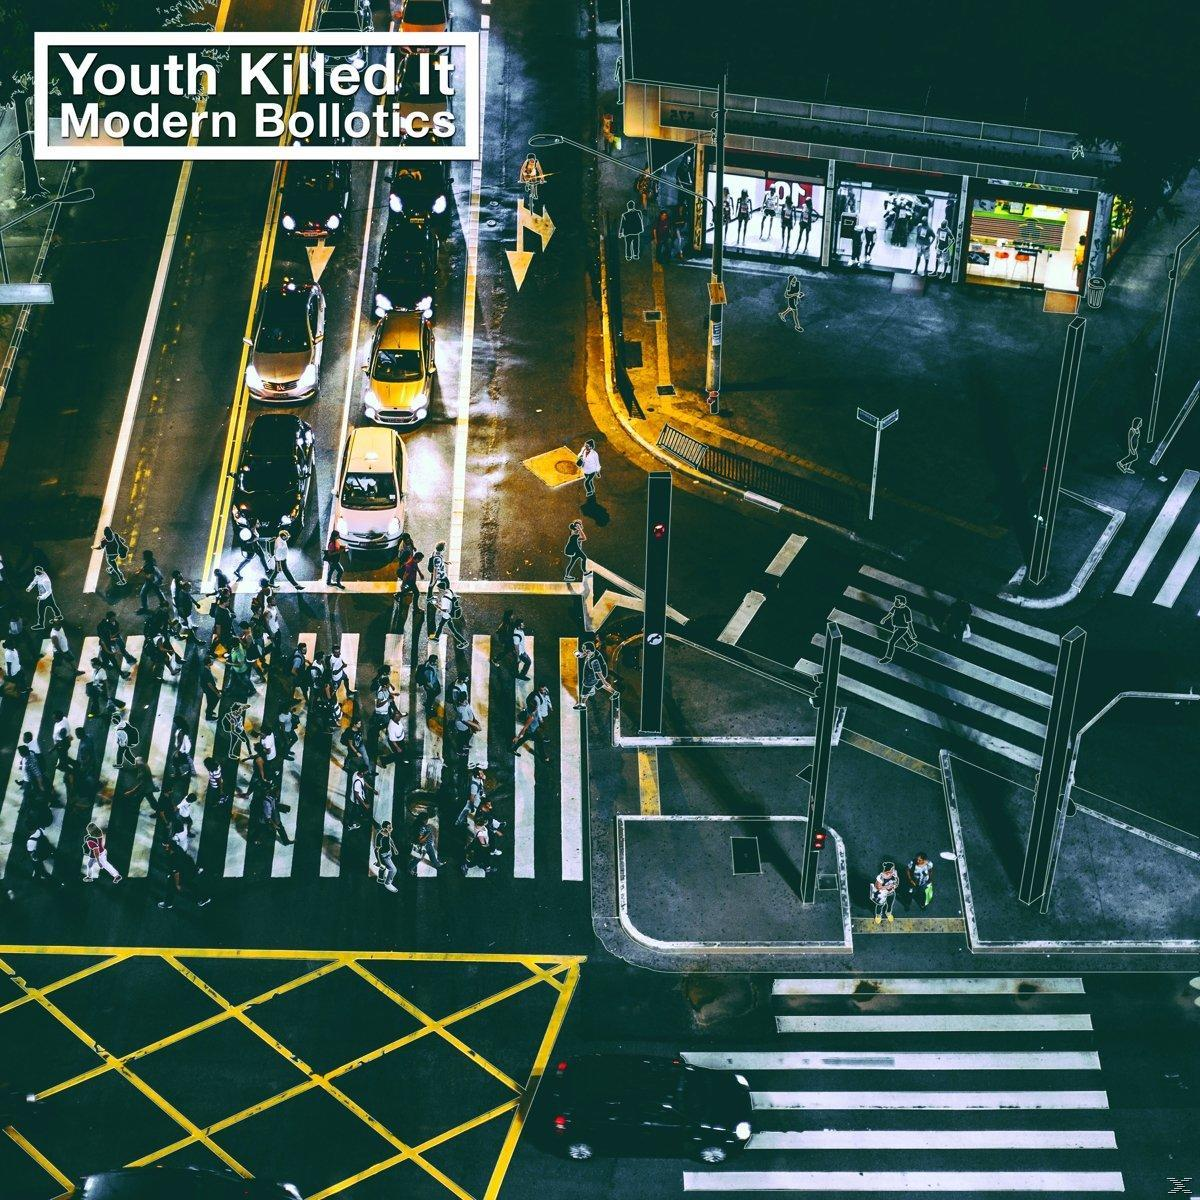 It (CD) Killed Modern Youth - - Bollotics